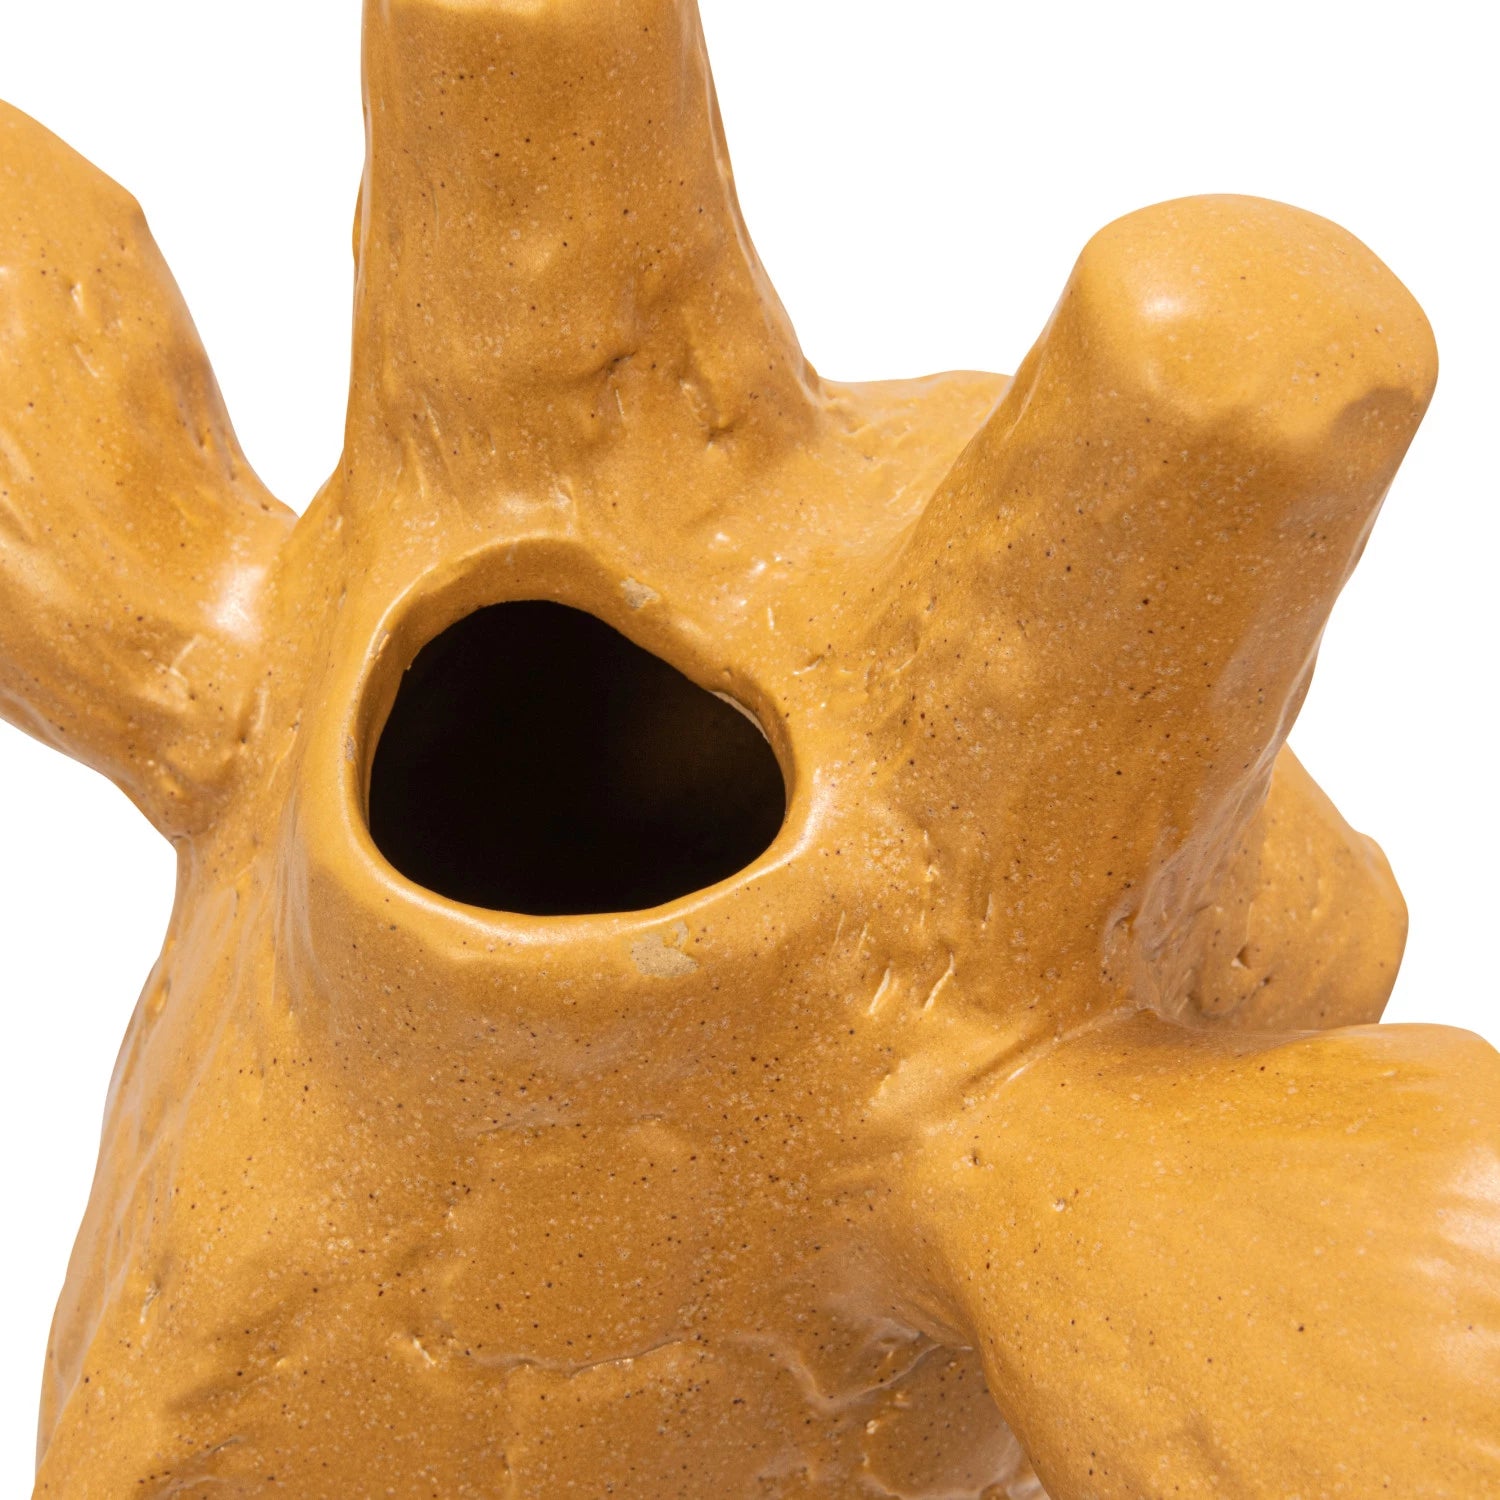 Stoneware Giraffe Head Vase